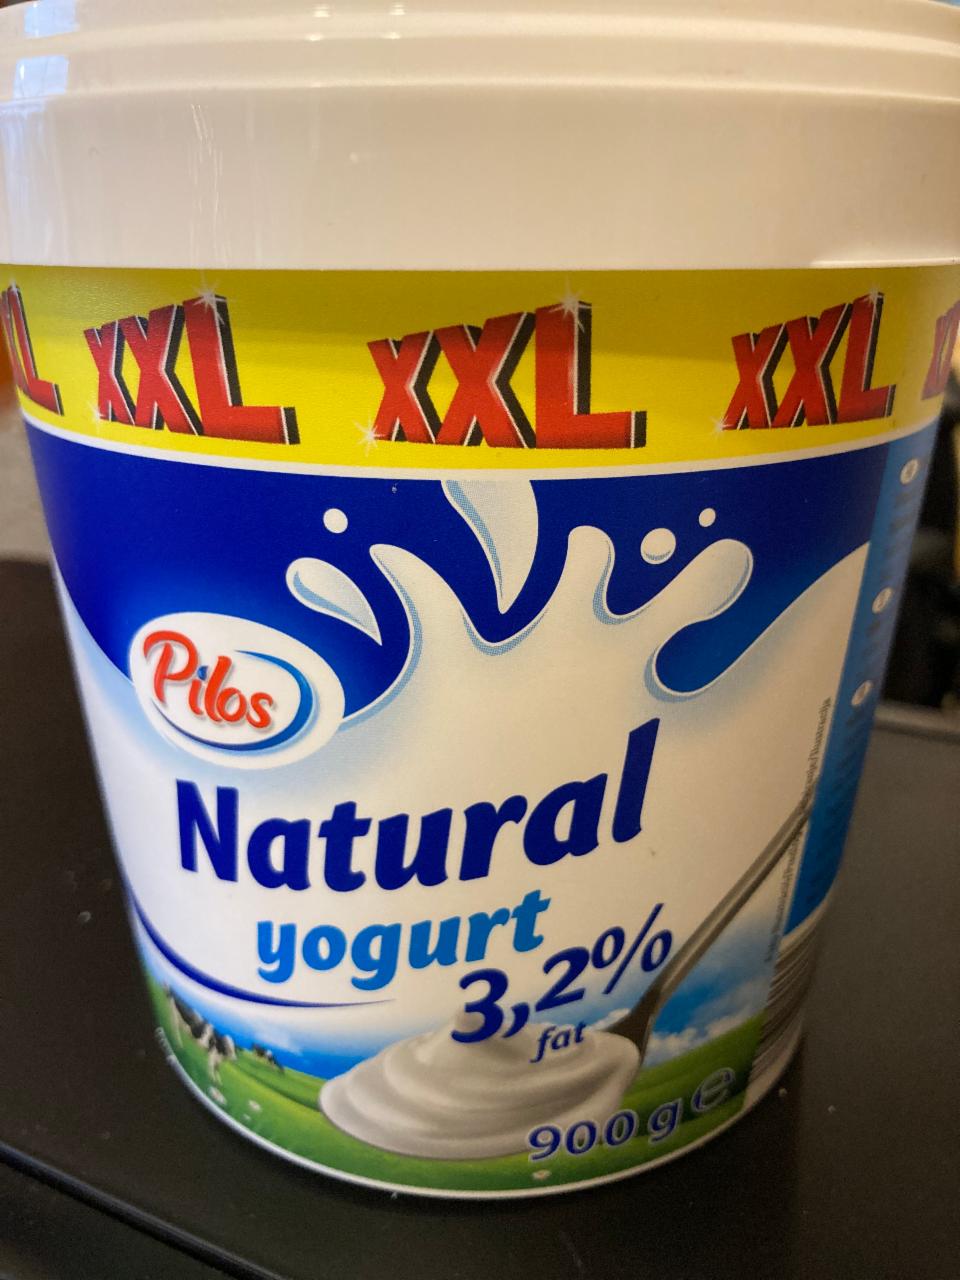 Képek - Natural yoghurt 3,2% Pilos